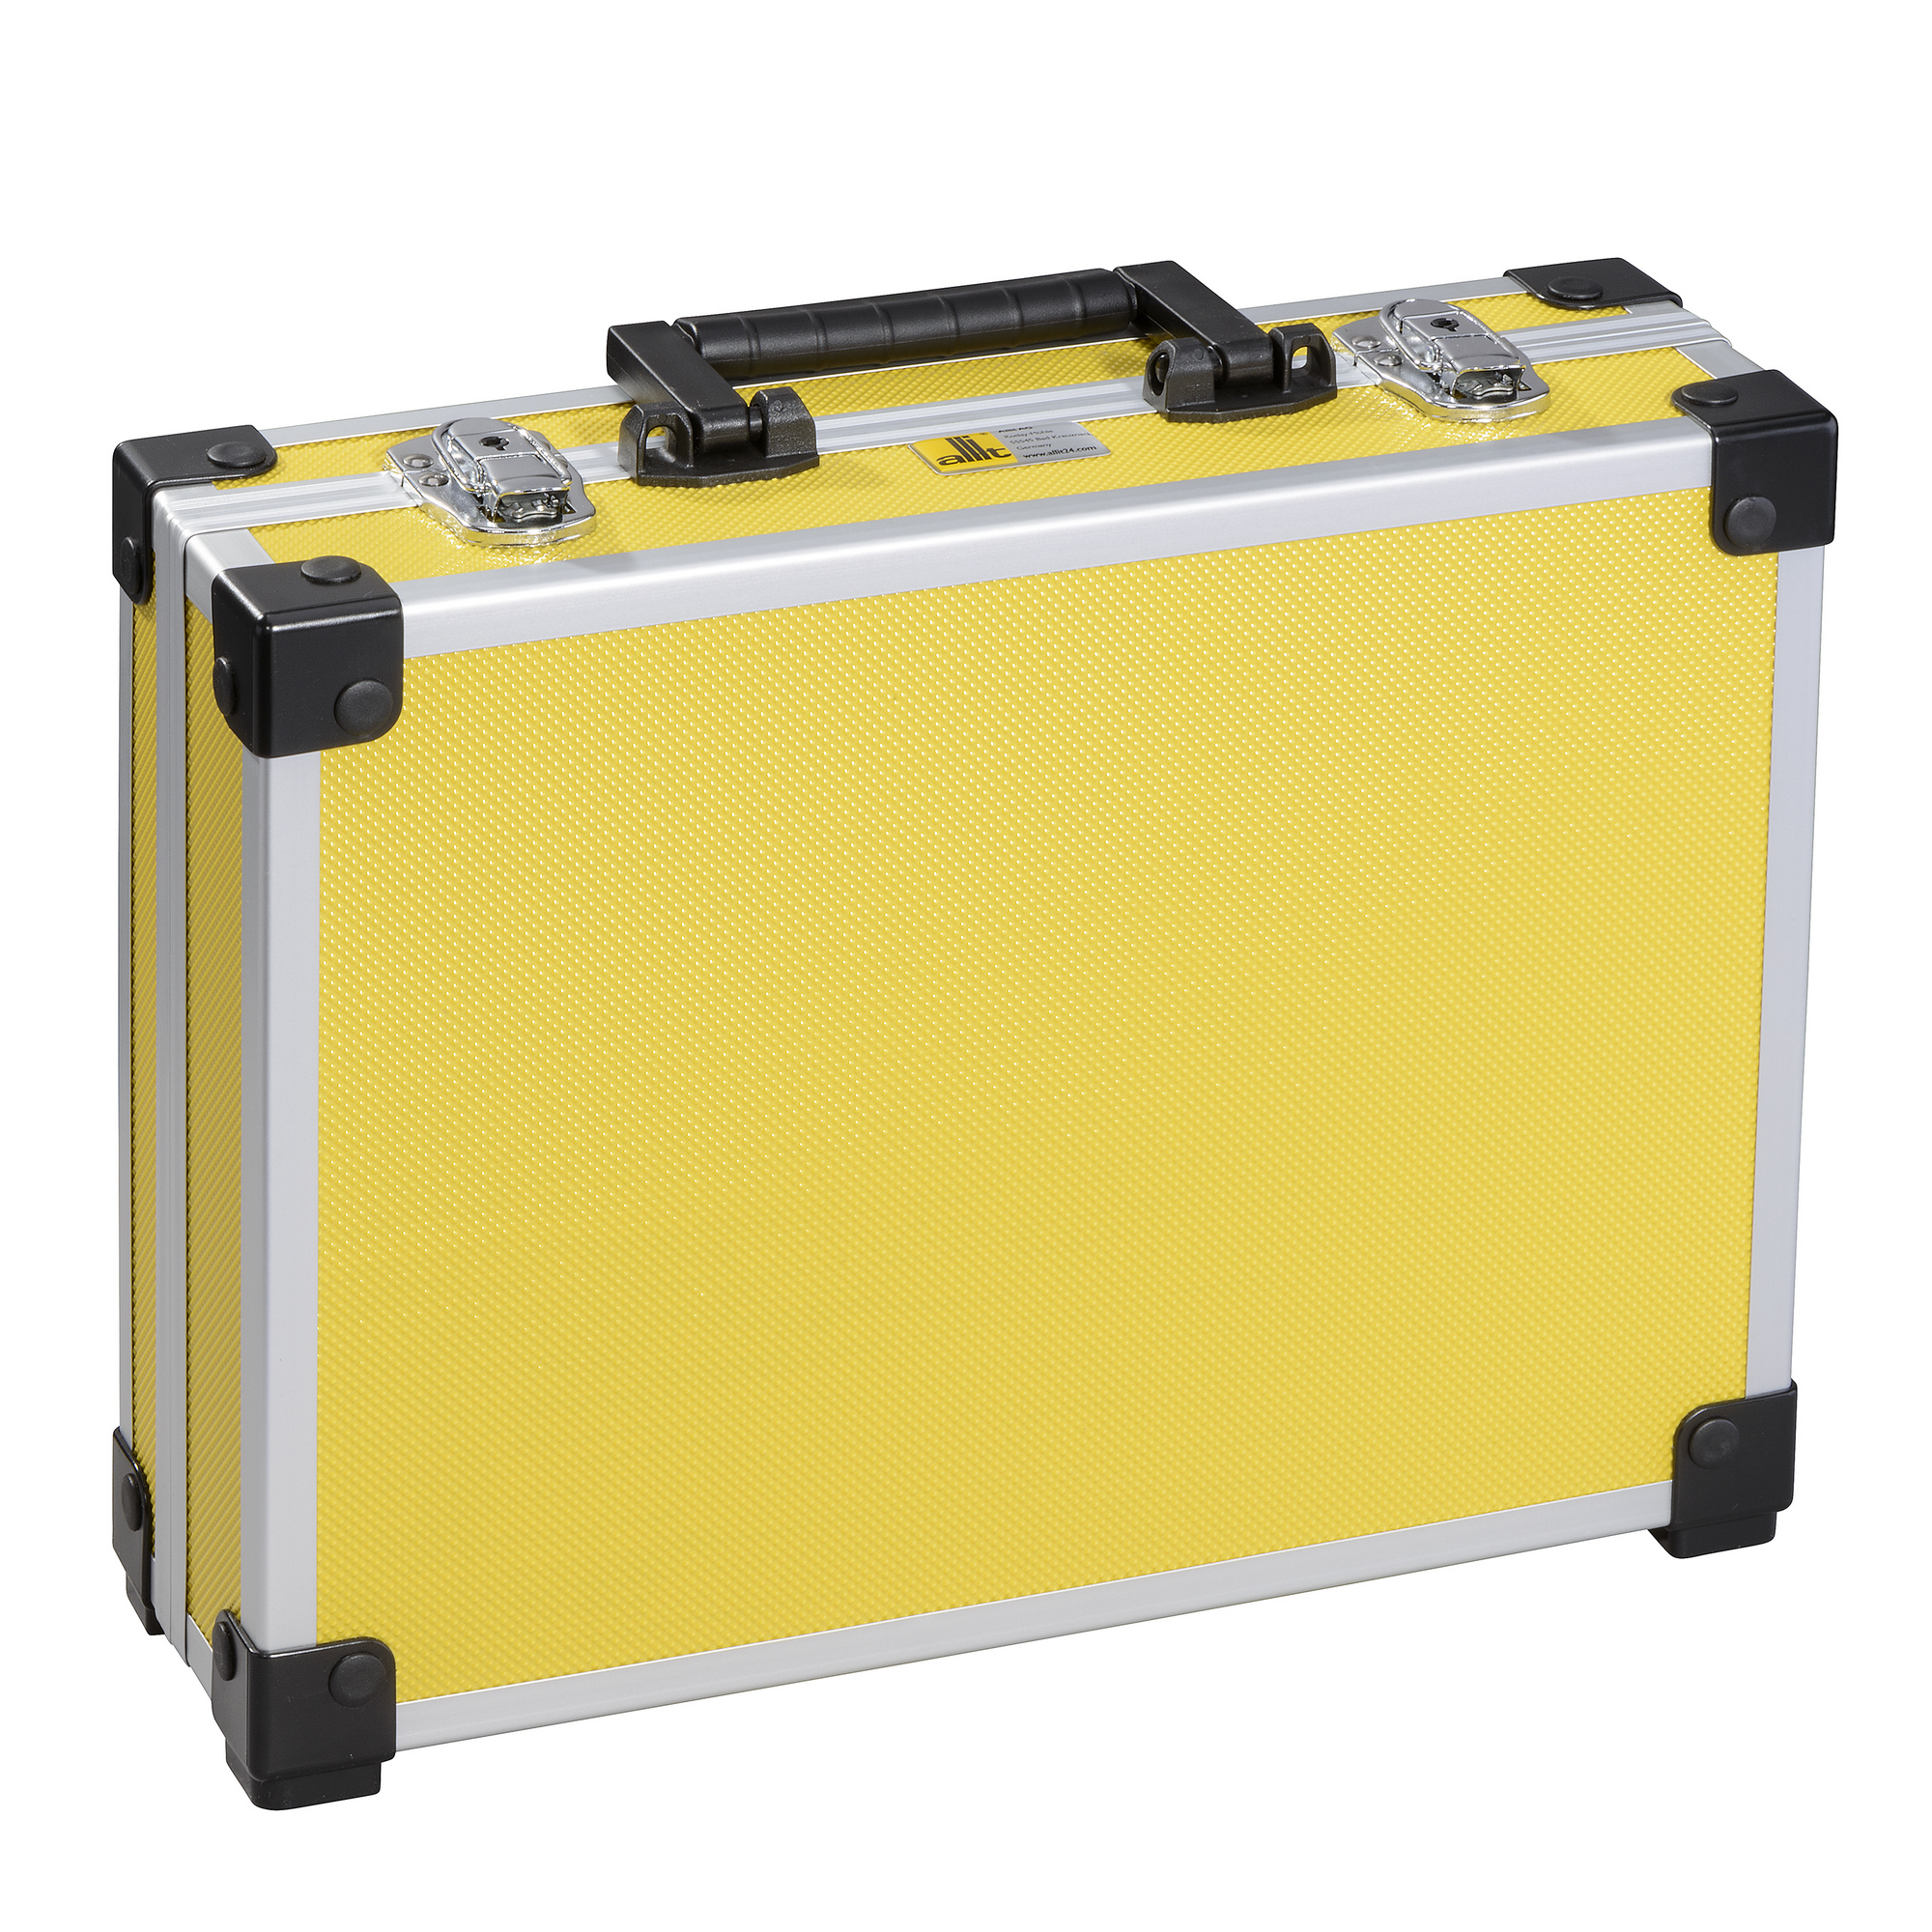 AluPlus Utensilien-/Verpackungskoffer 'Basic L 35' gelb 34,5 x 28,5 x 10,5 cm + product picture